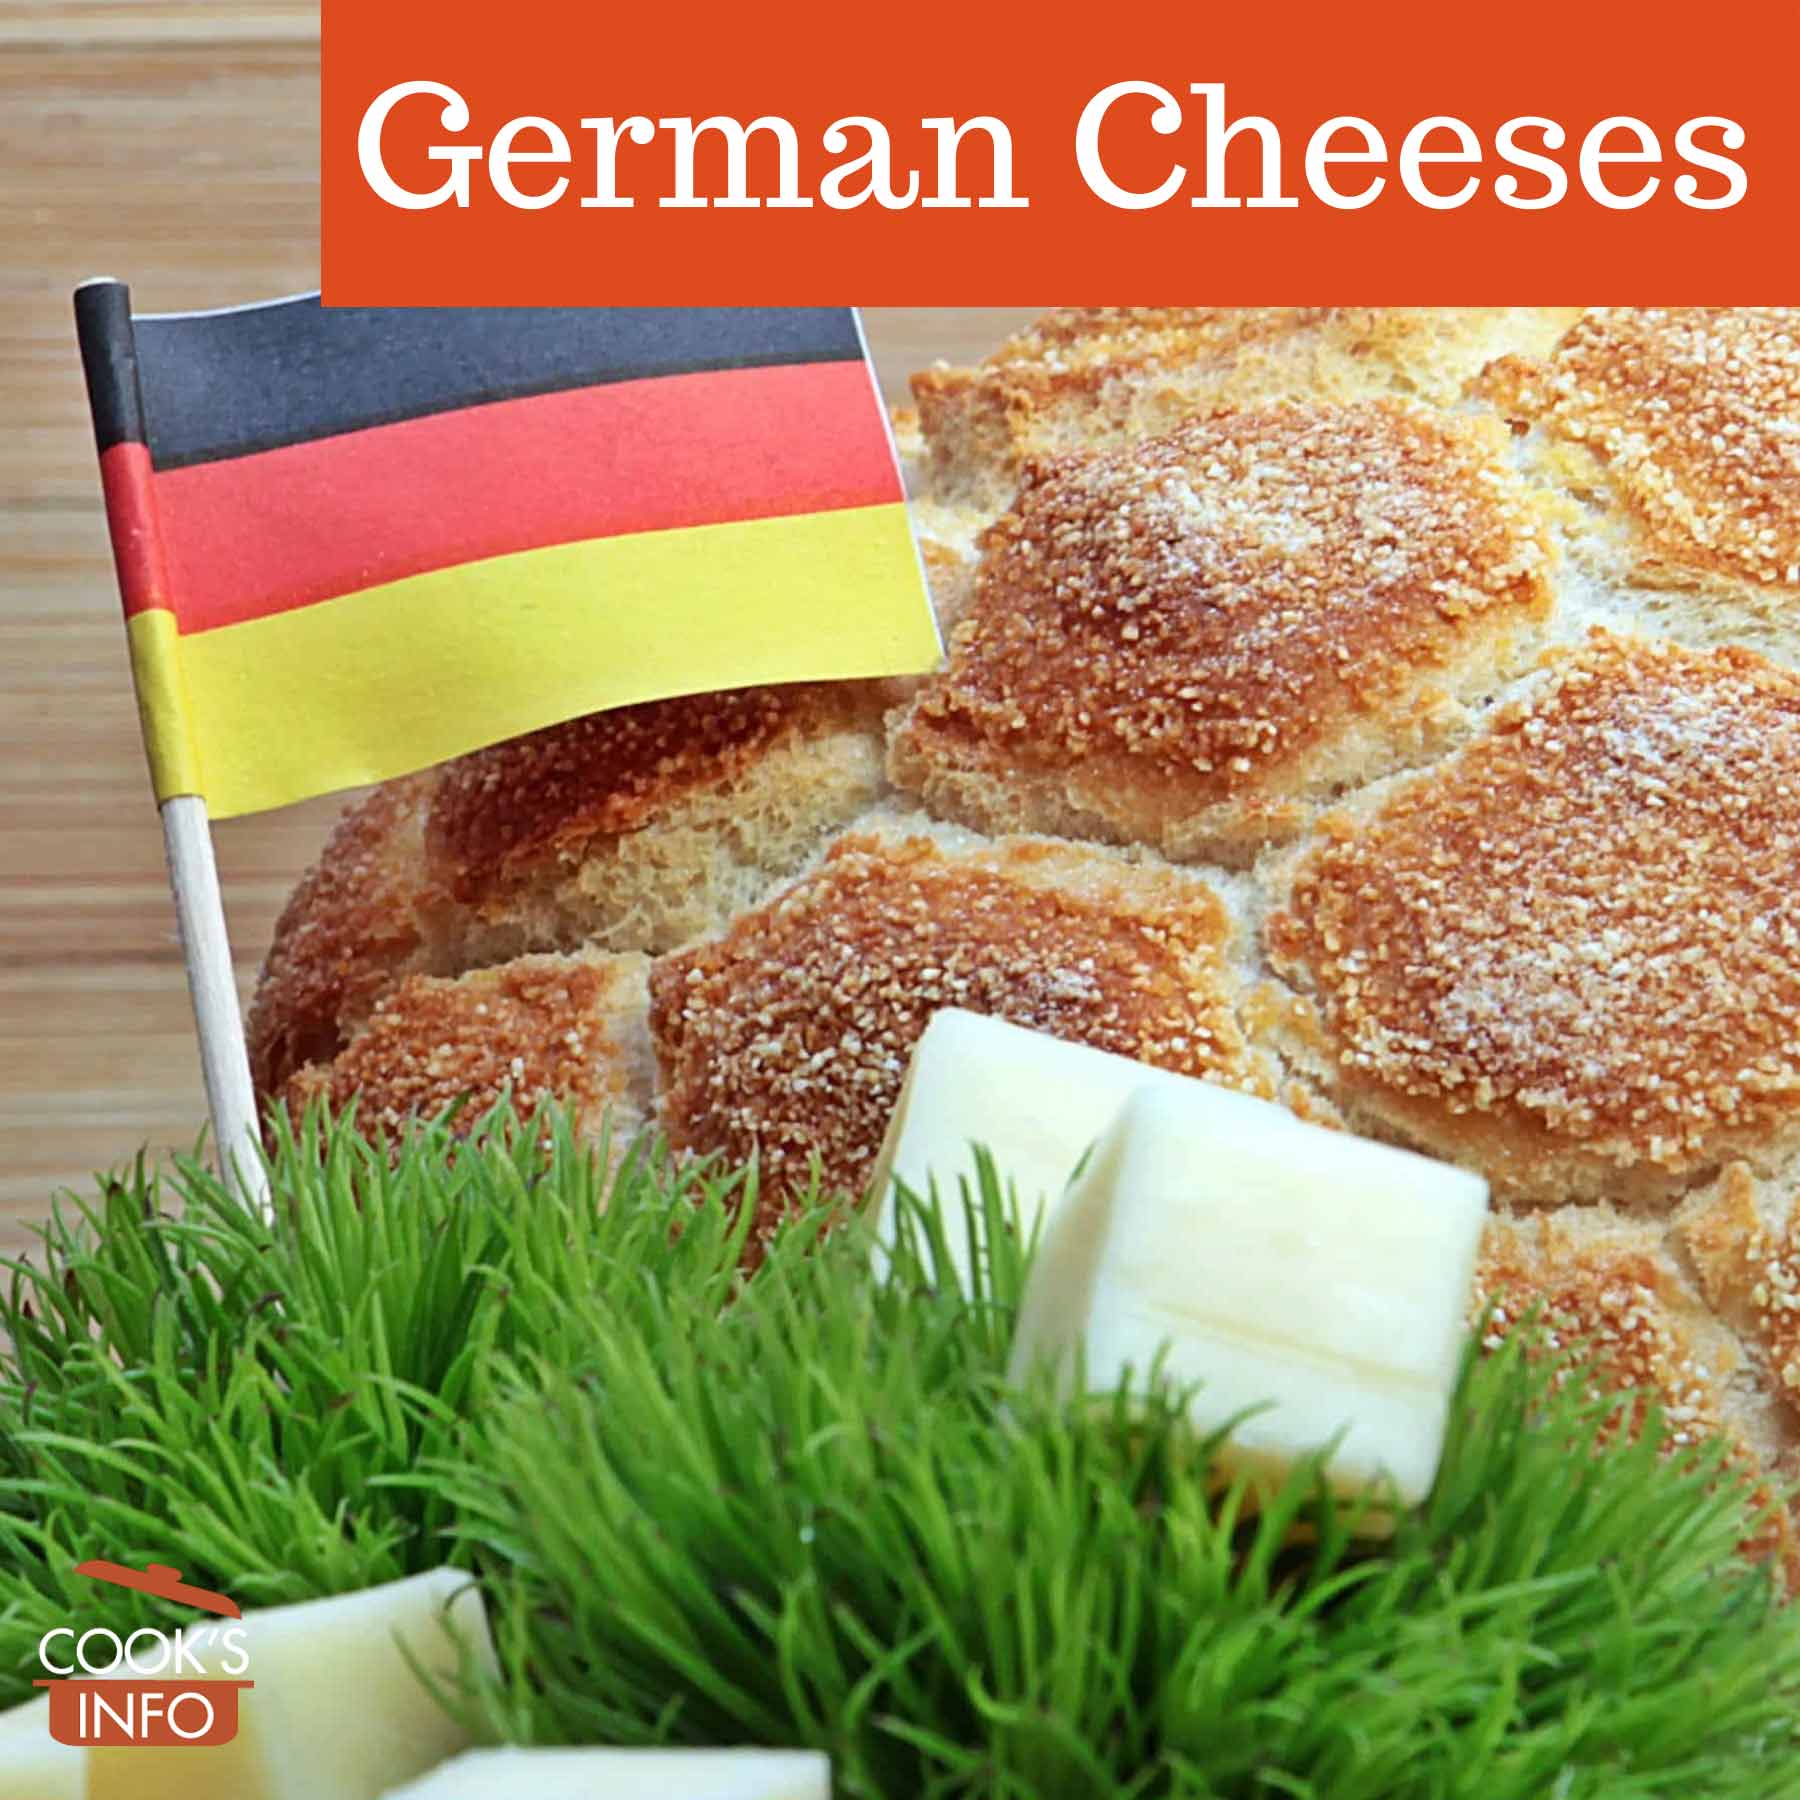 German cheese